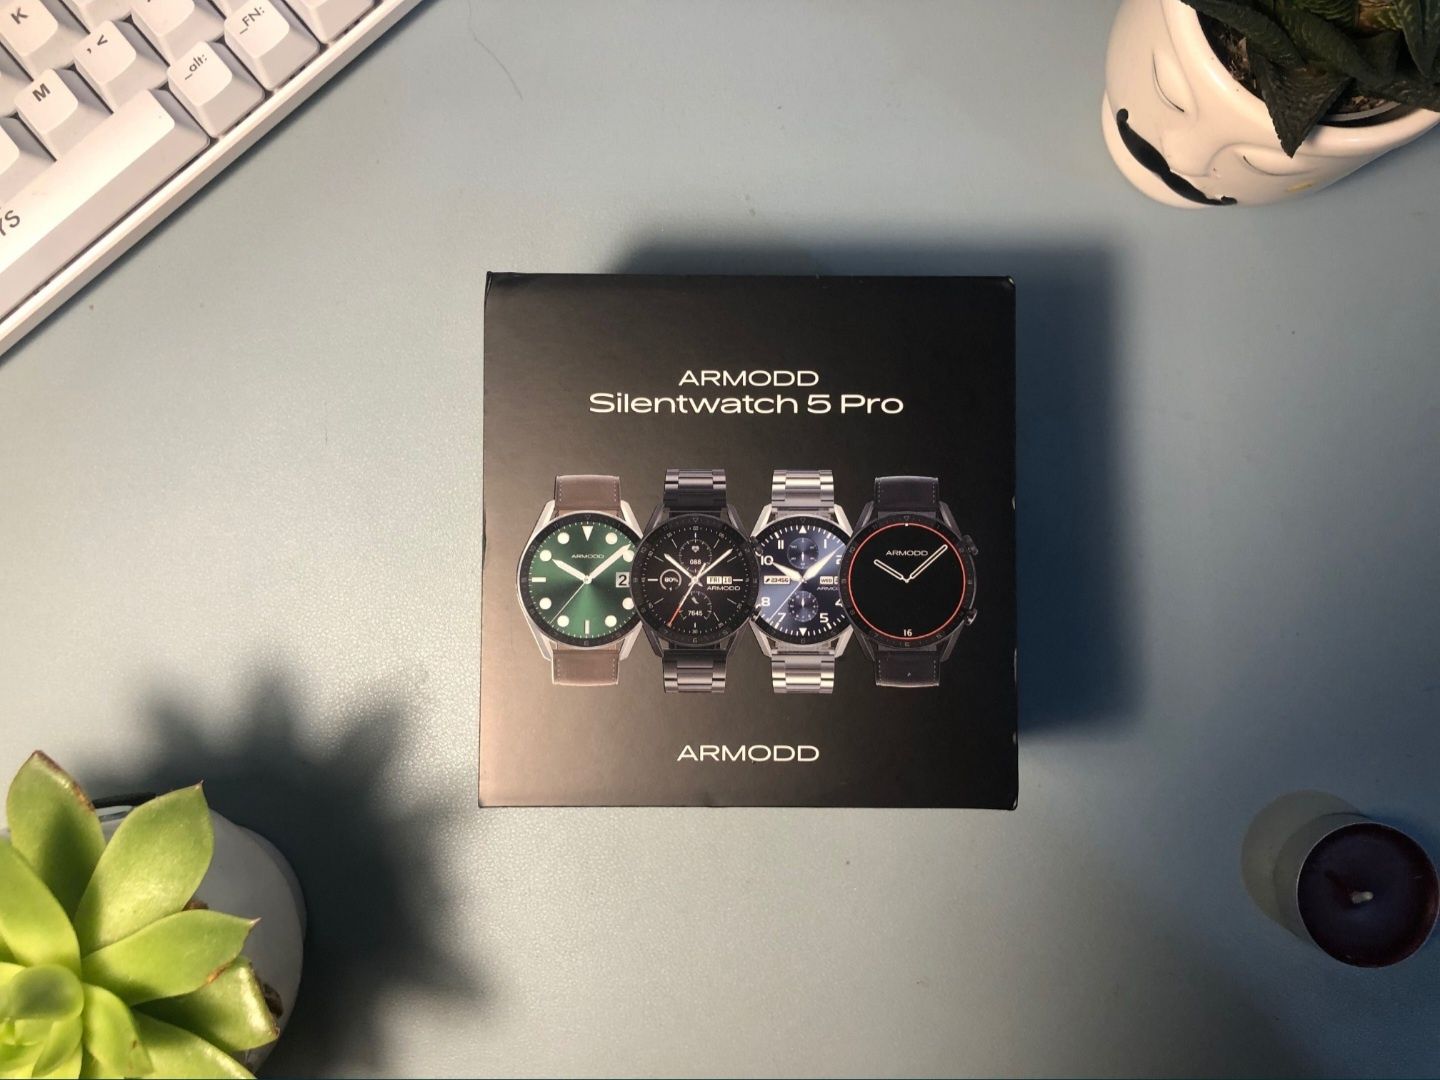 Smartwatch Armodd silent watch 5 pro